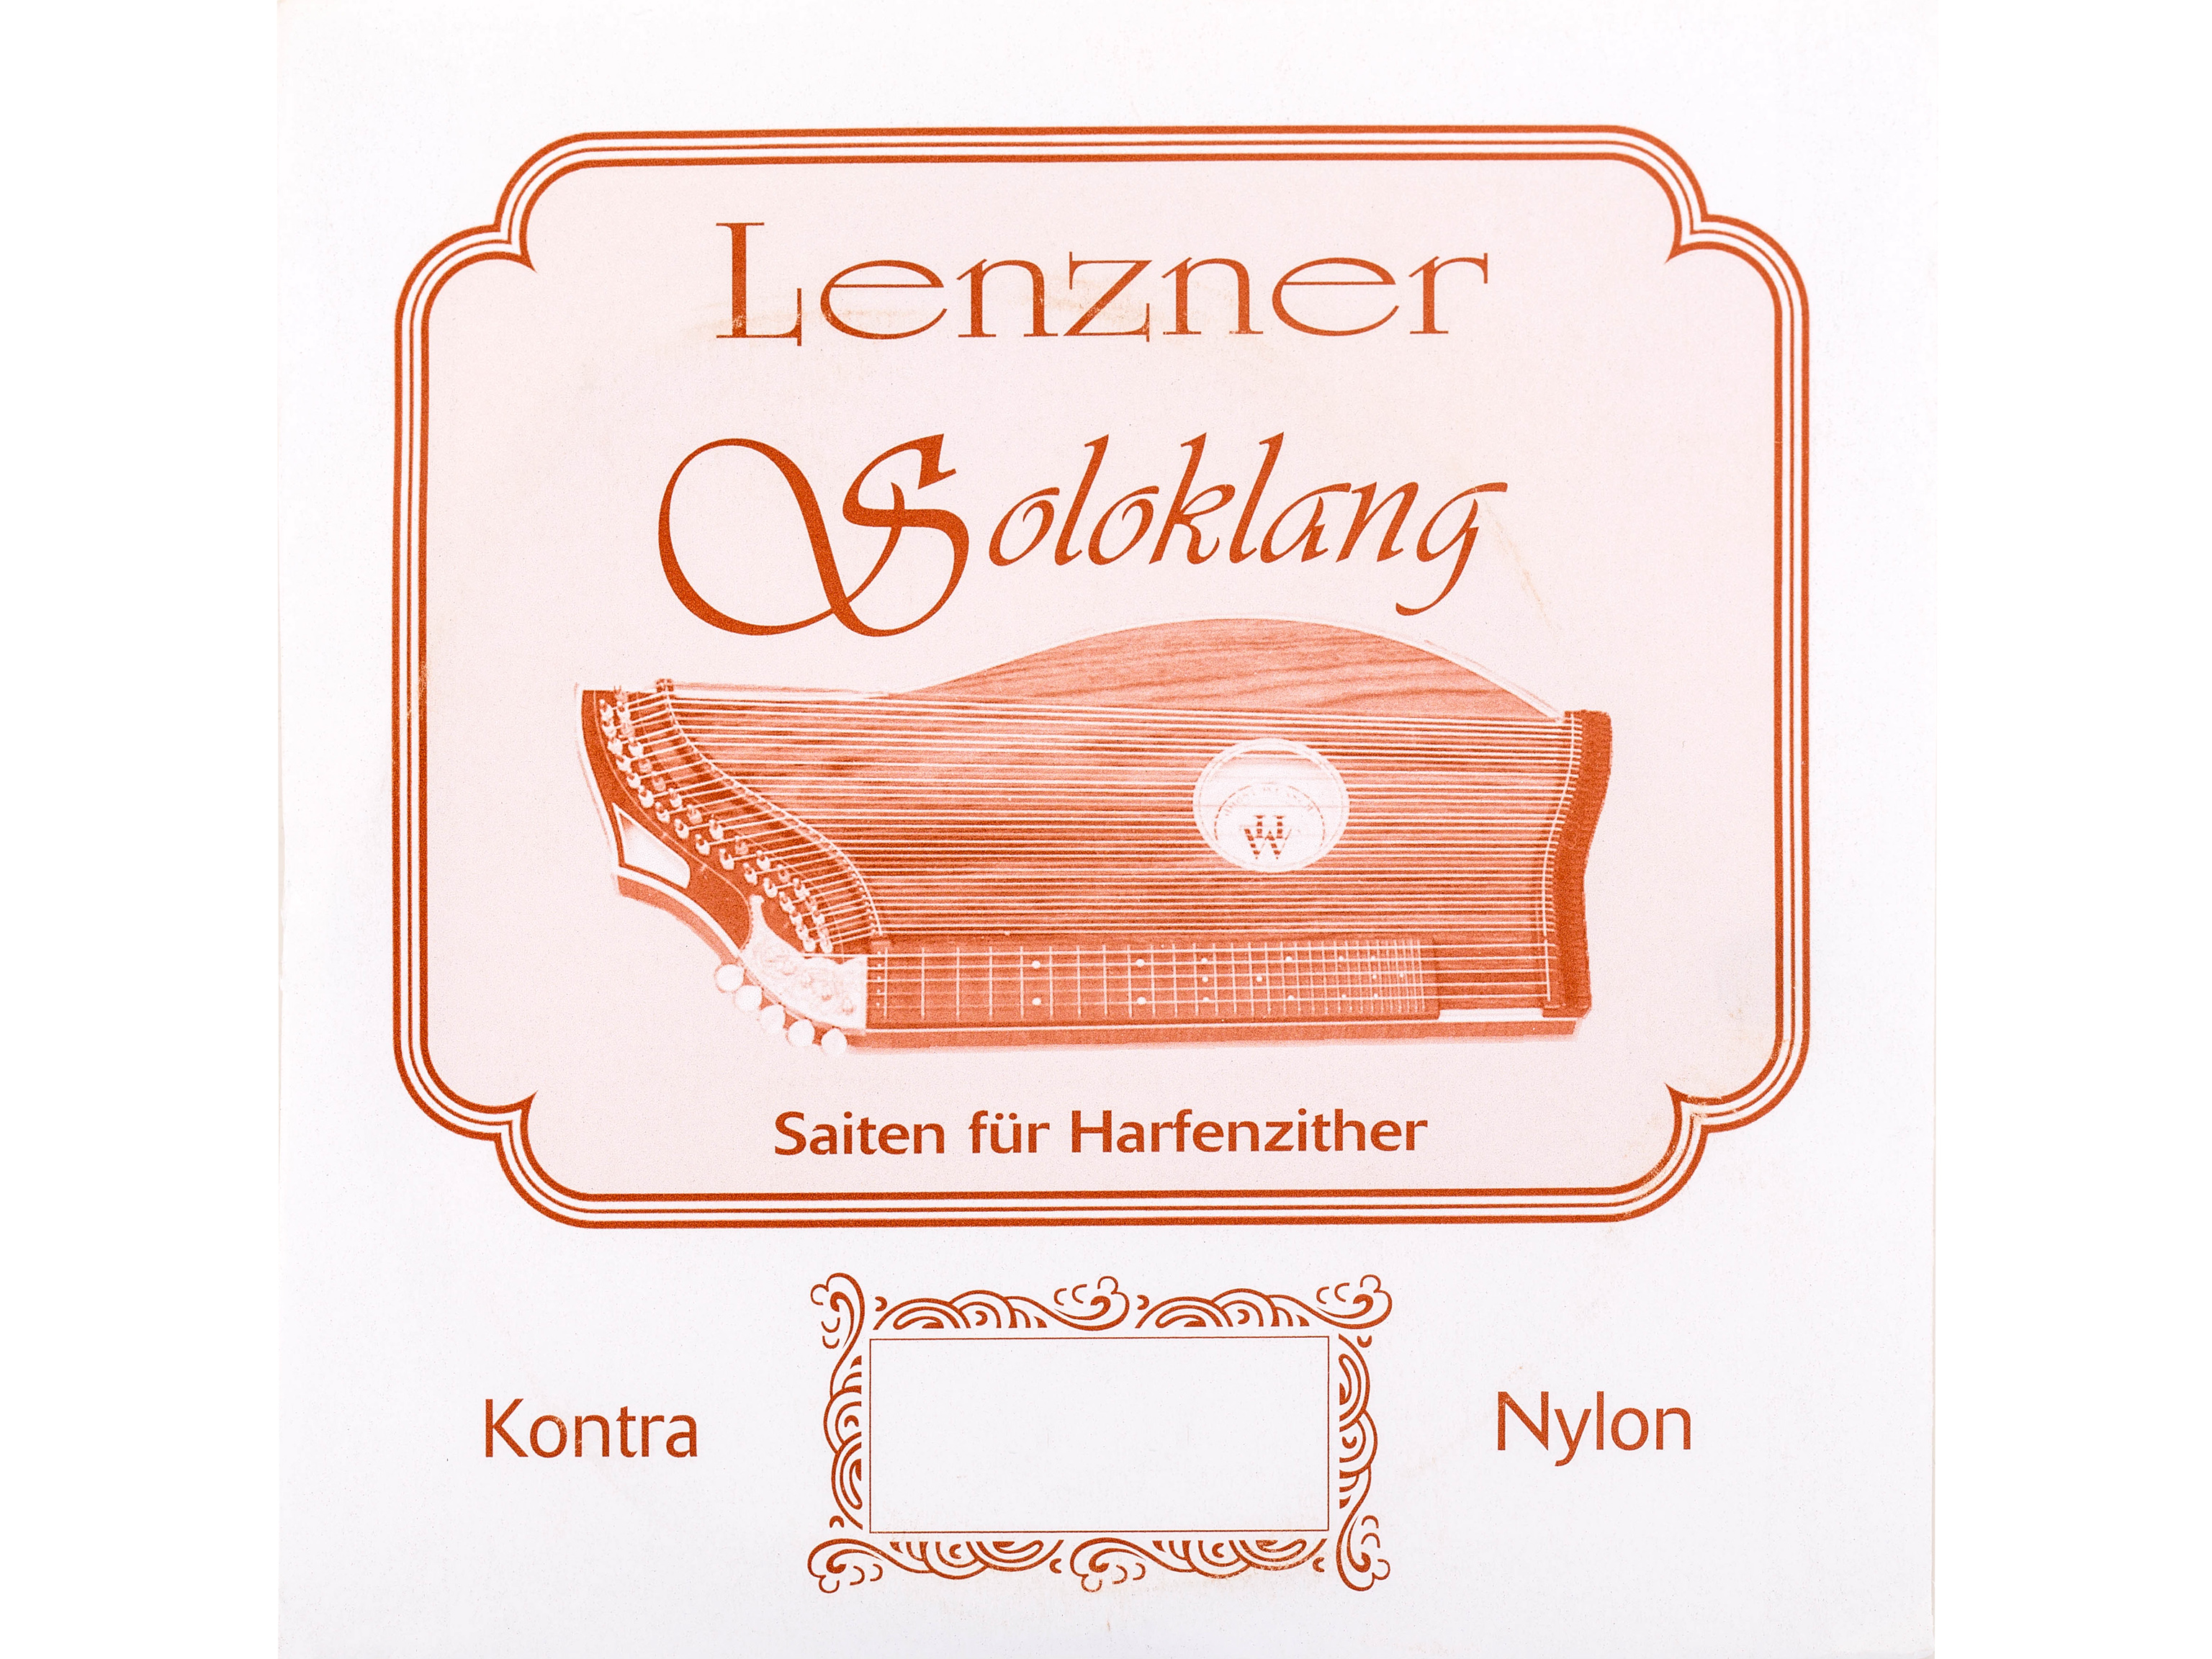 Lenzner 35. G Zithersaite Soloklang Kontra